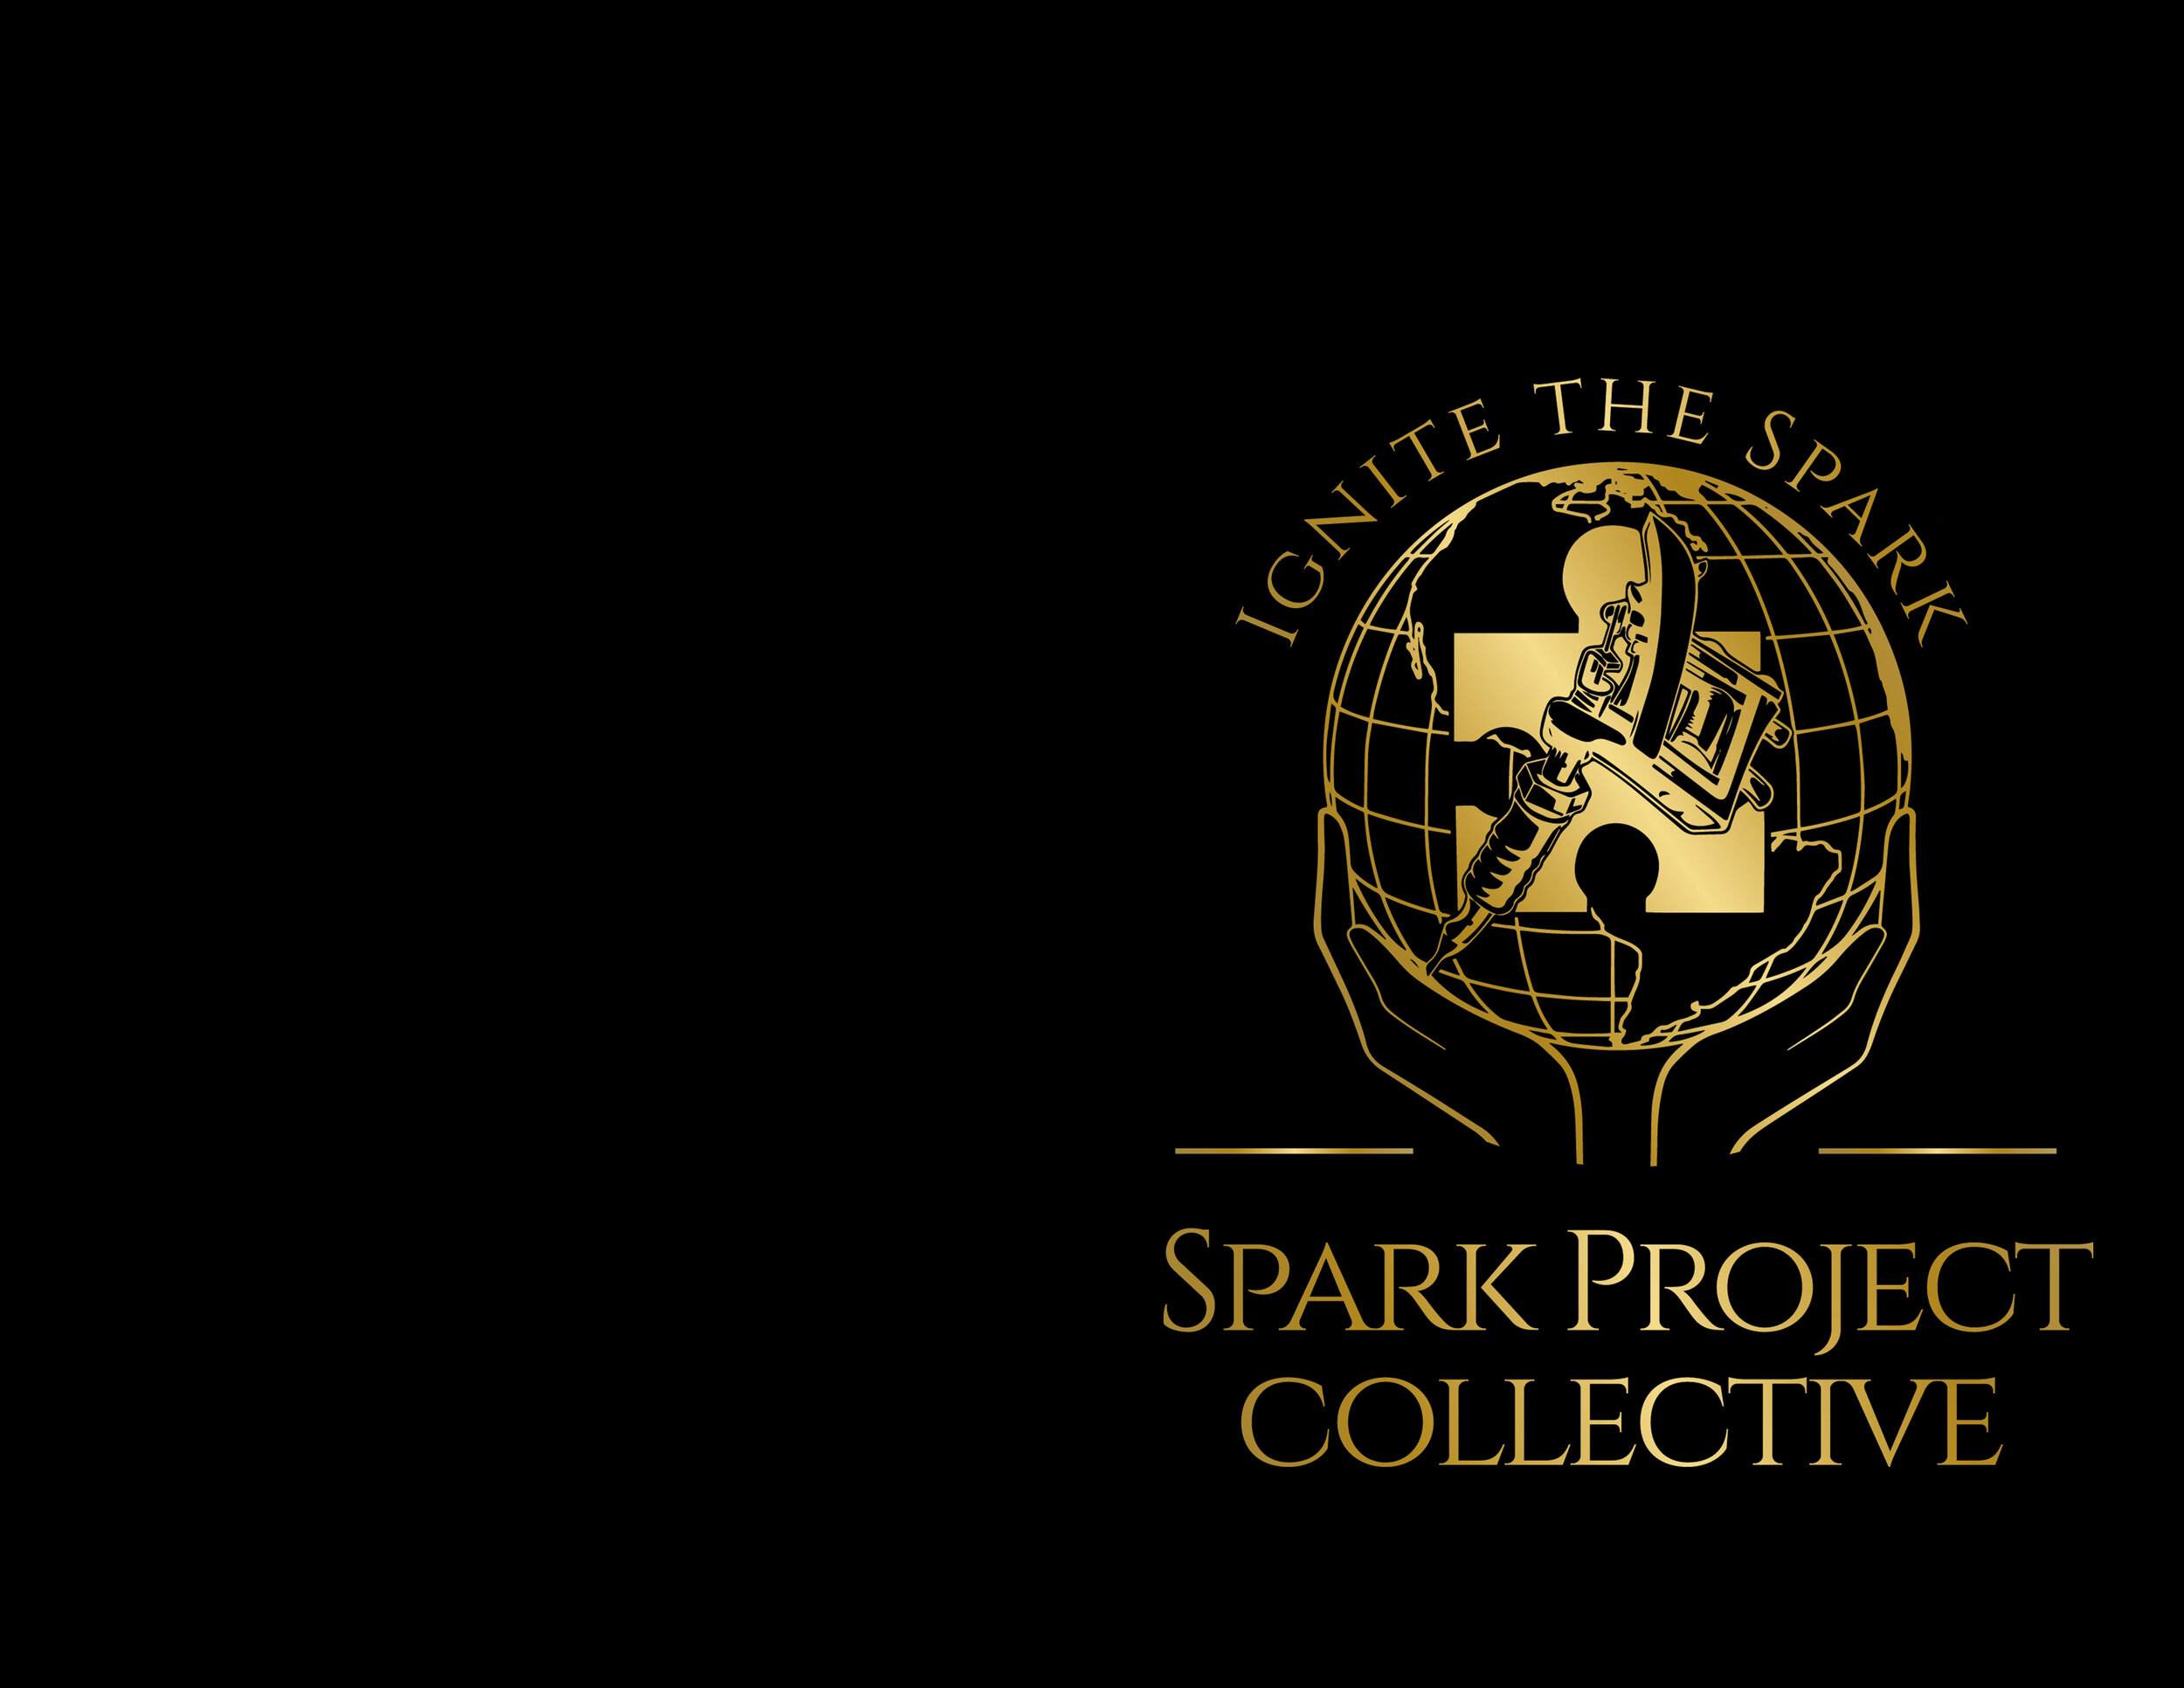 Spark project tattoo